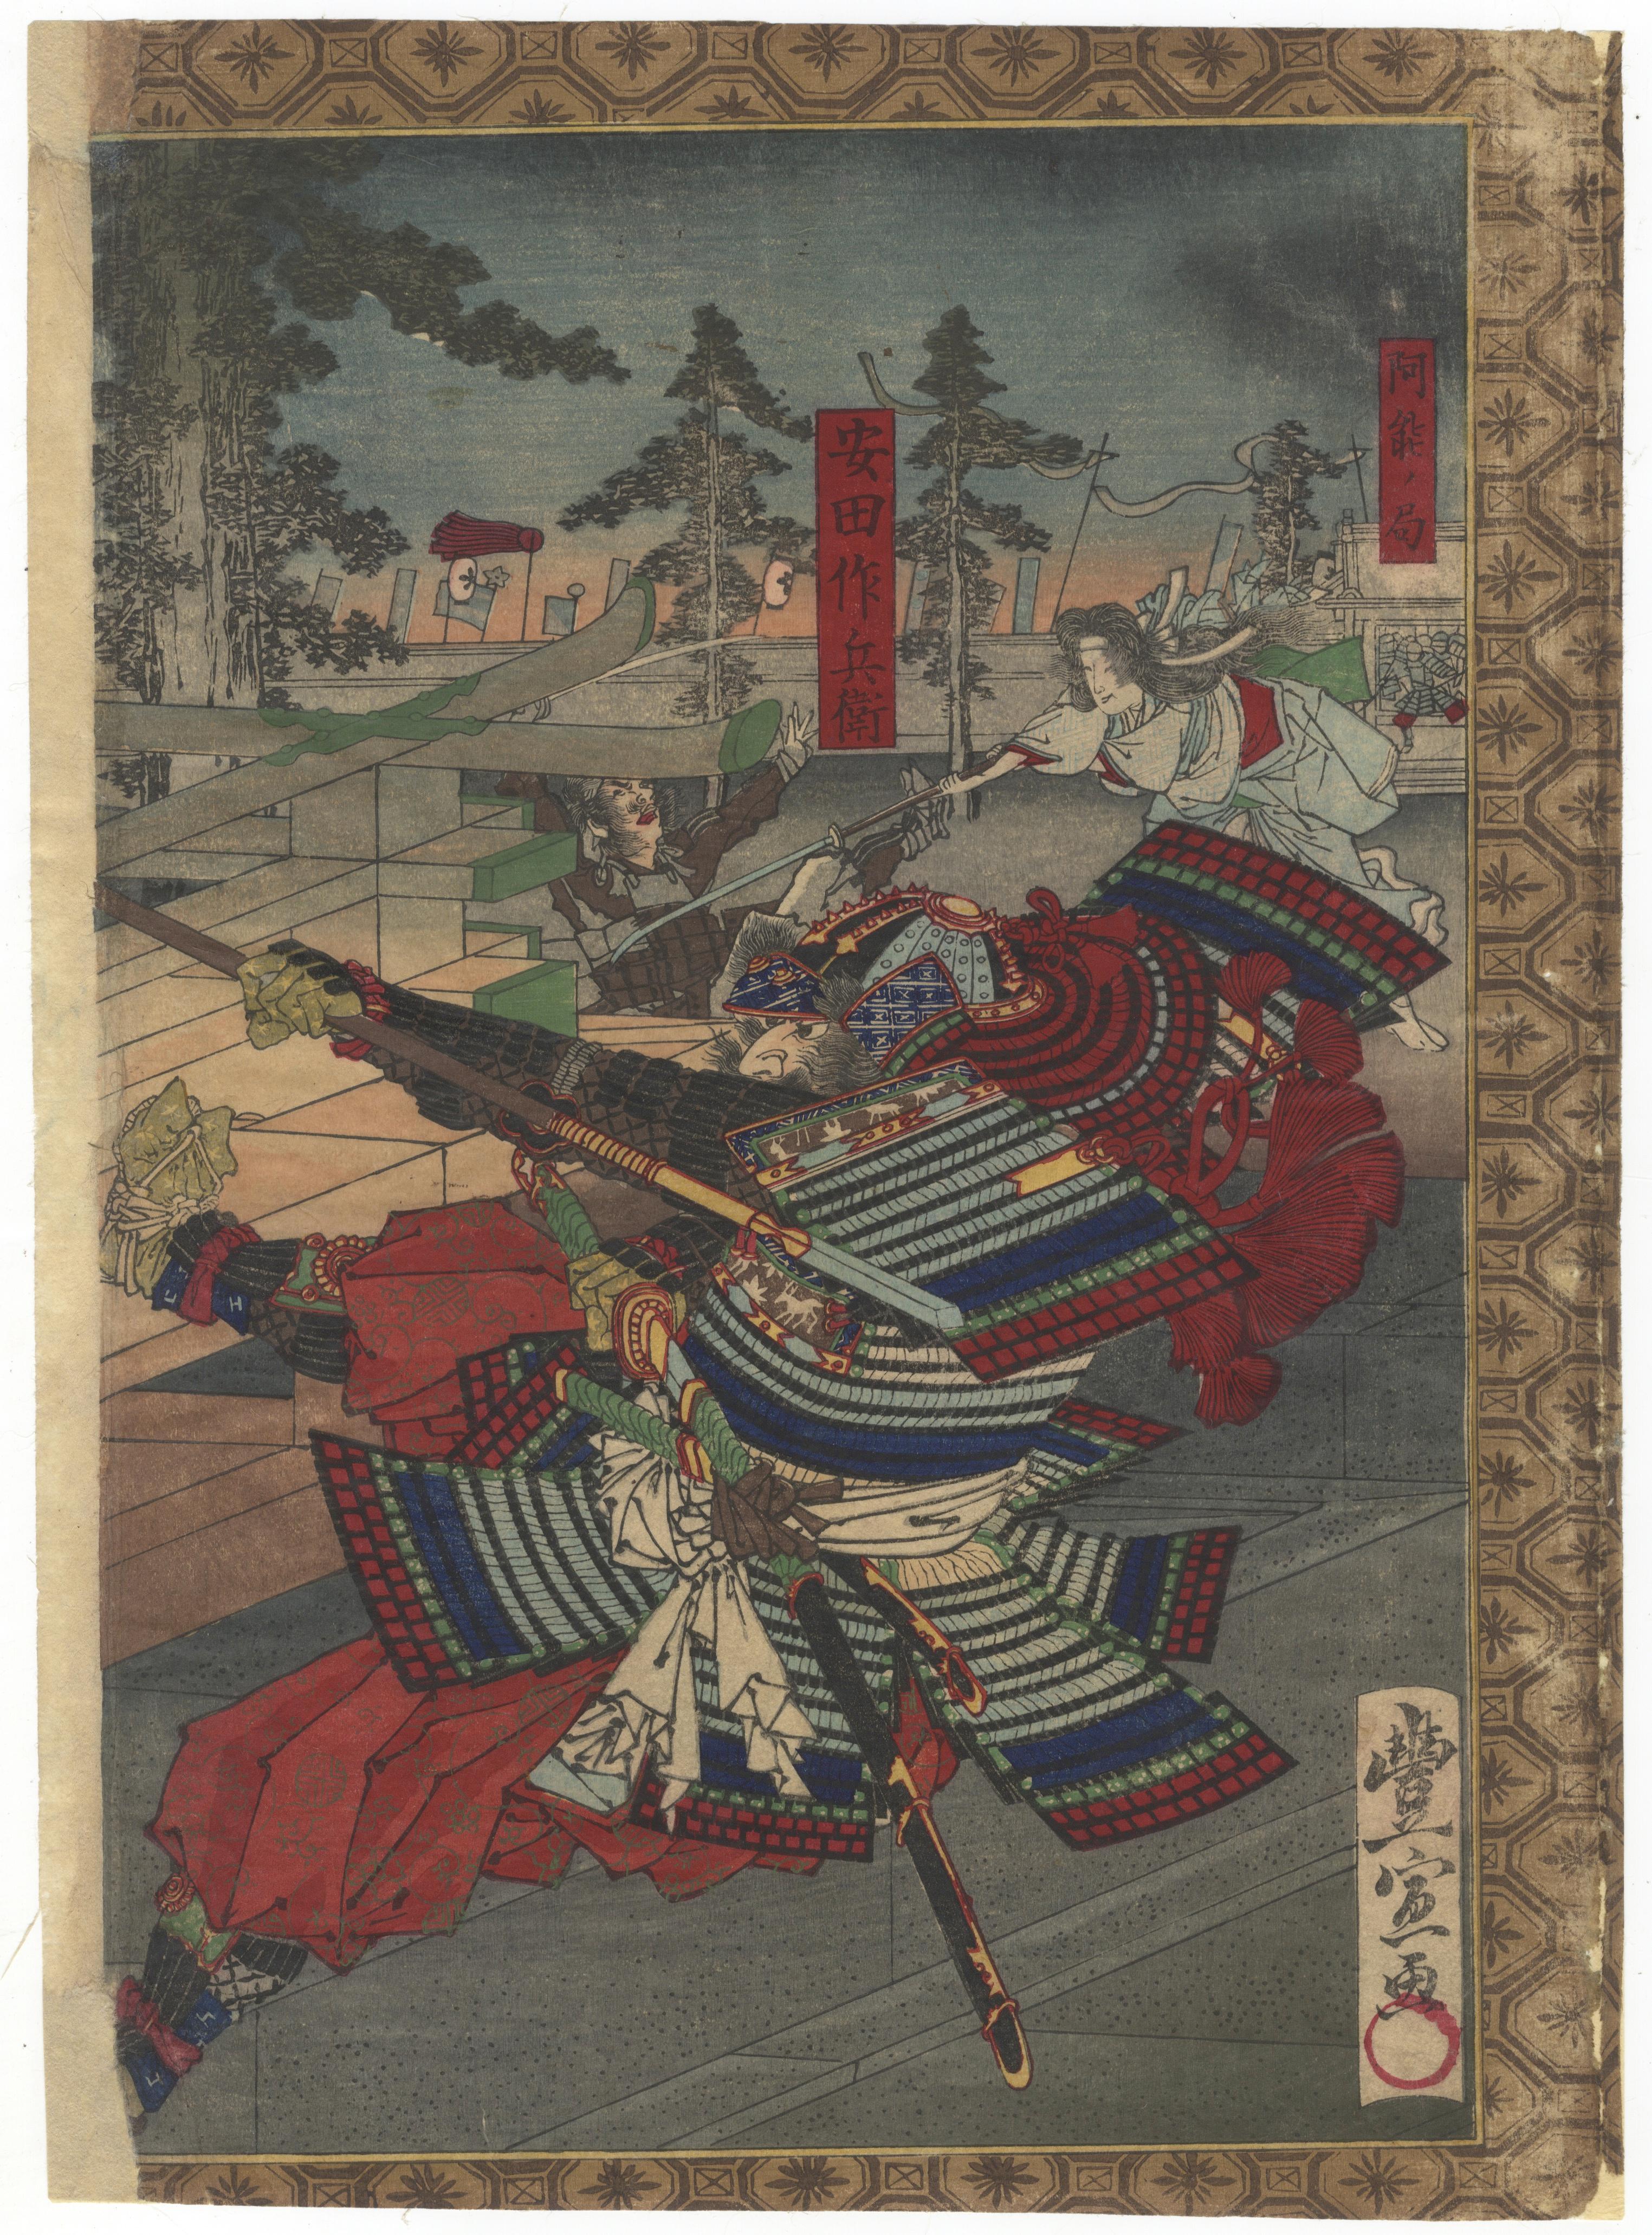 Artist: Toyonobu Utagawa (1859-1896)
Title: Honnoji Incident
Series: The New Biography of Toyotomi Hideyoshi
Date: 1883
Publisher: Matsuki Heikichi
Dimensions: (L) 24.9 x 34.3 (R) 24.7 x 34.3 cm

Toyonobu Utagawa (1859-1896) was one of the